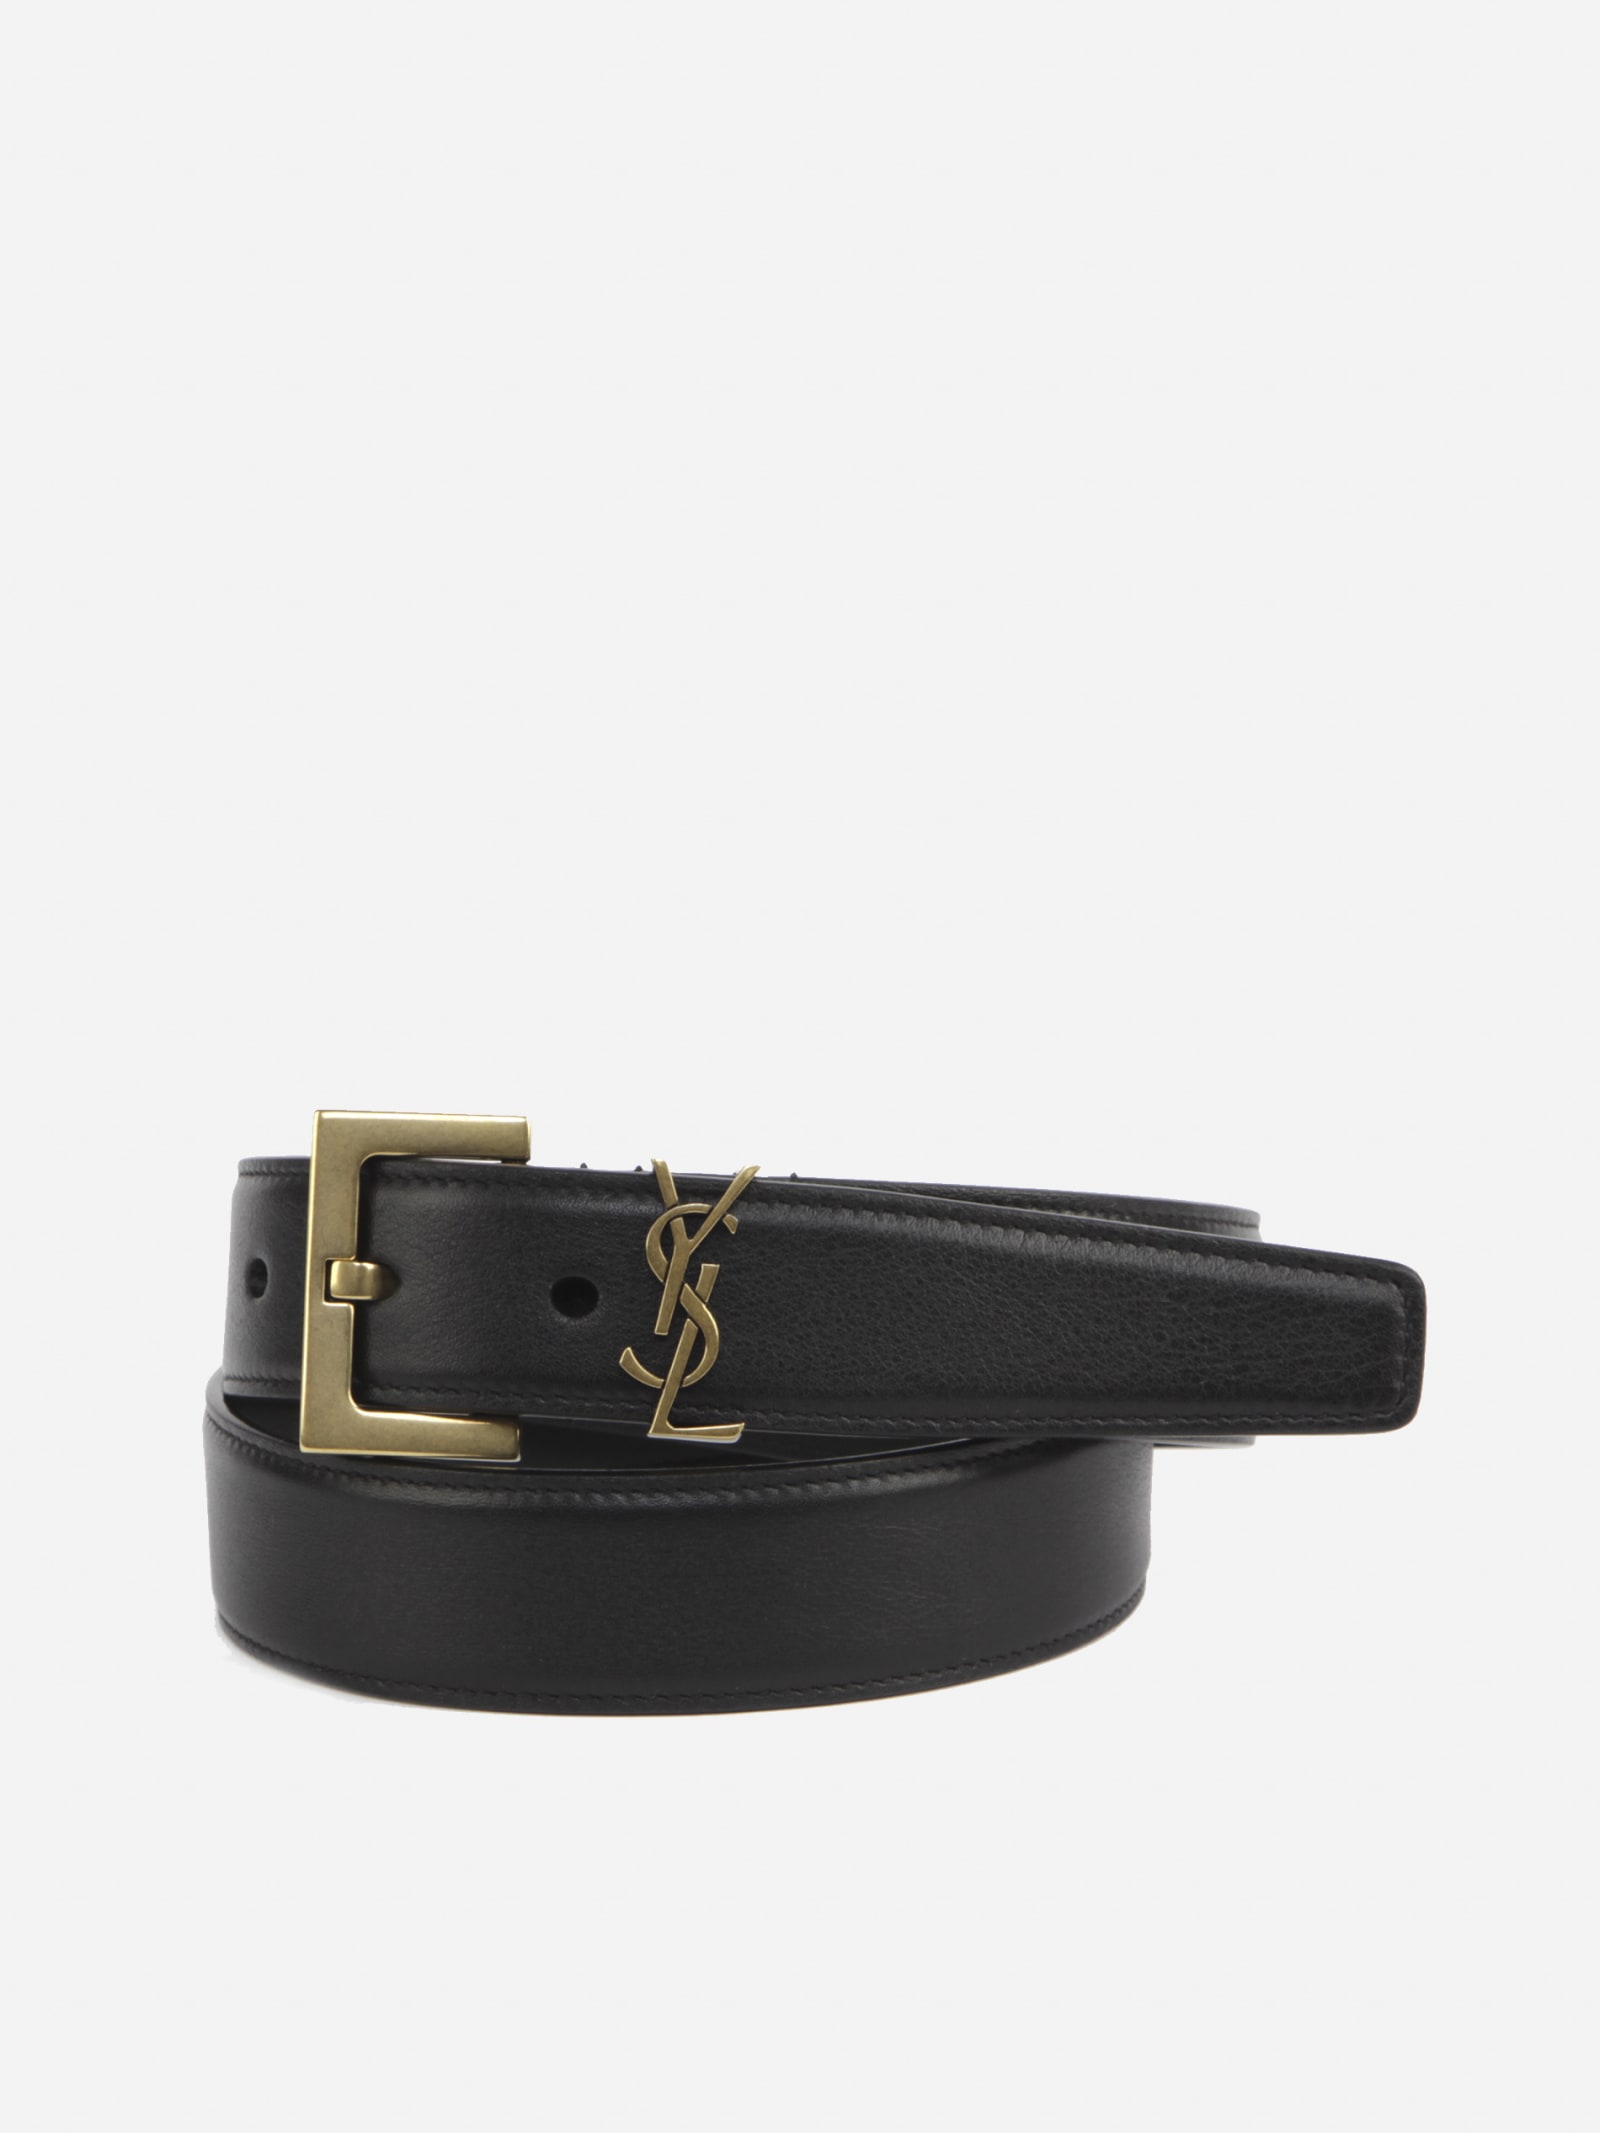 Saint Laurent Monogram Belt In Smooth Leather